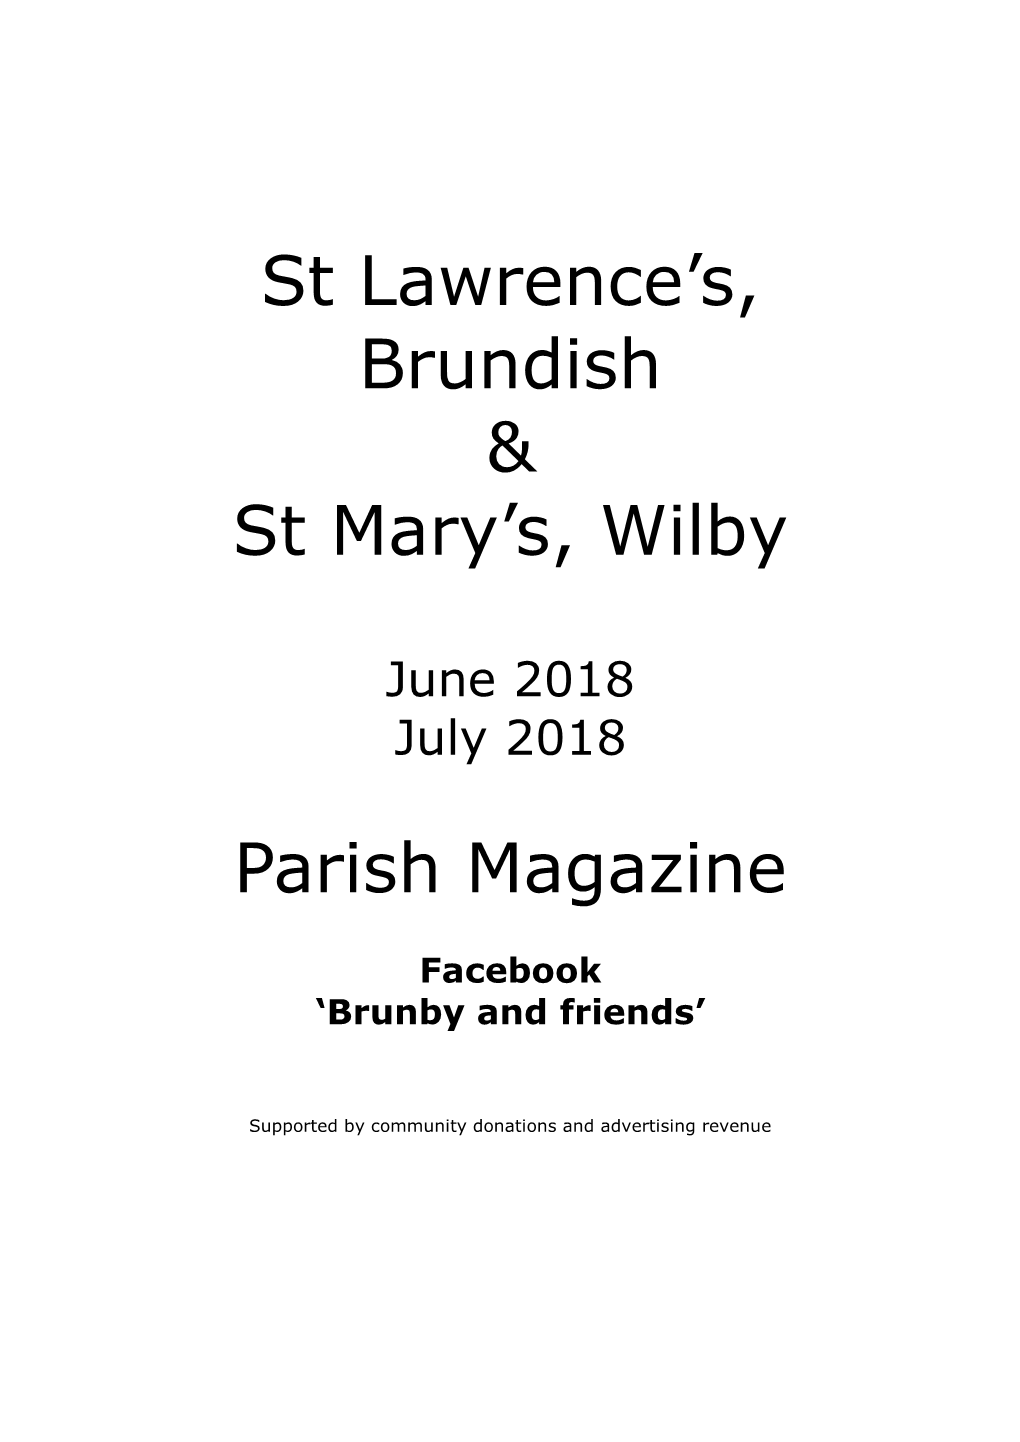 St Lawrence's, Brundish & St Mary's, Wilby Parish Magazine